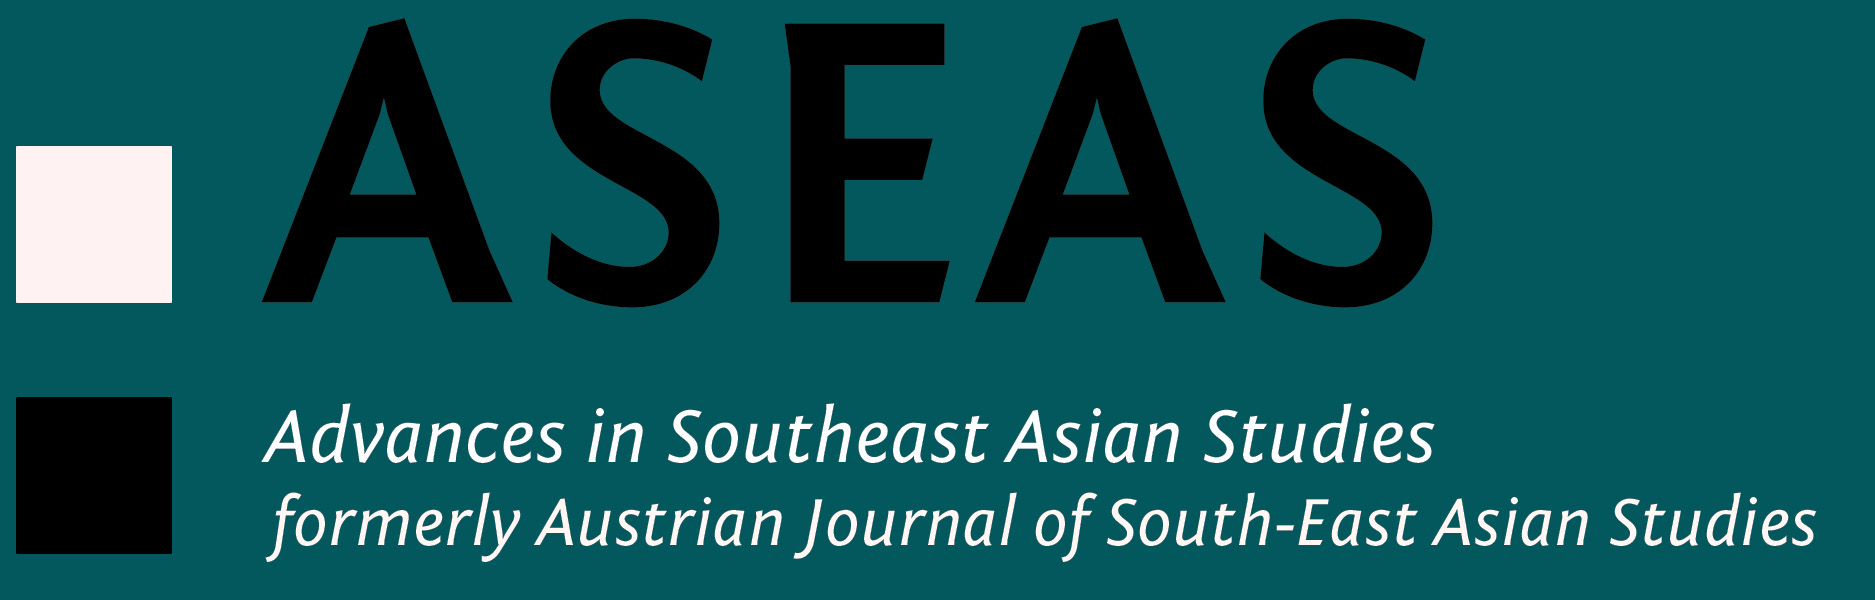 Advances in Southeast Asian Studies